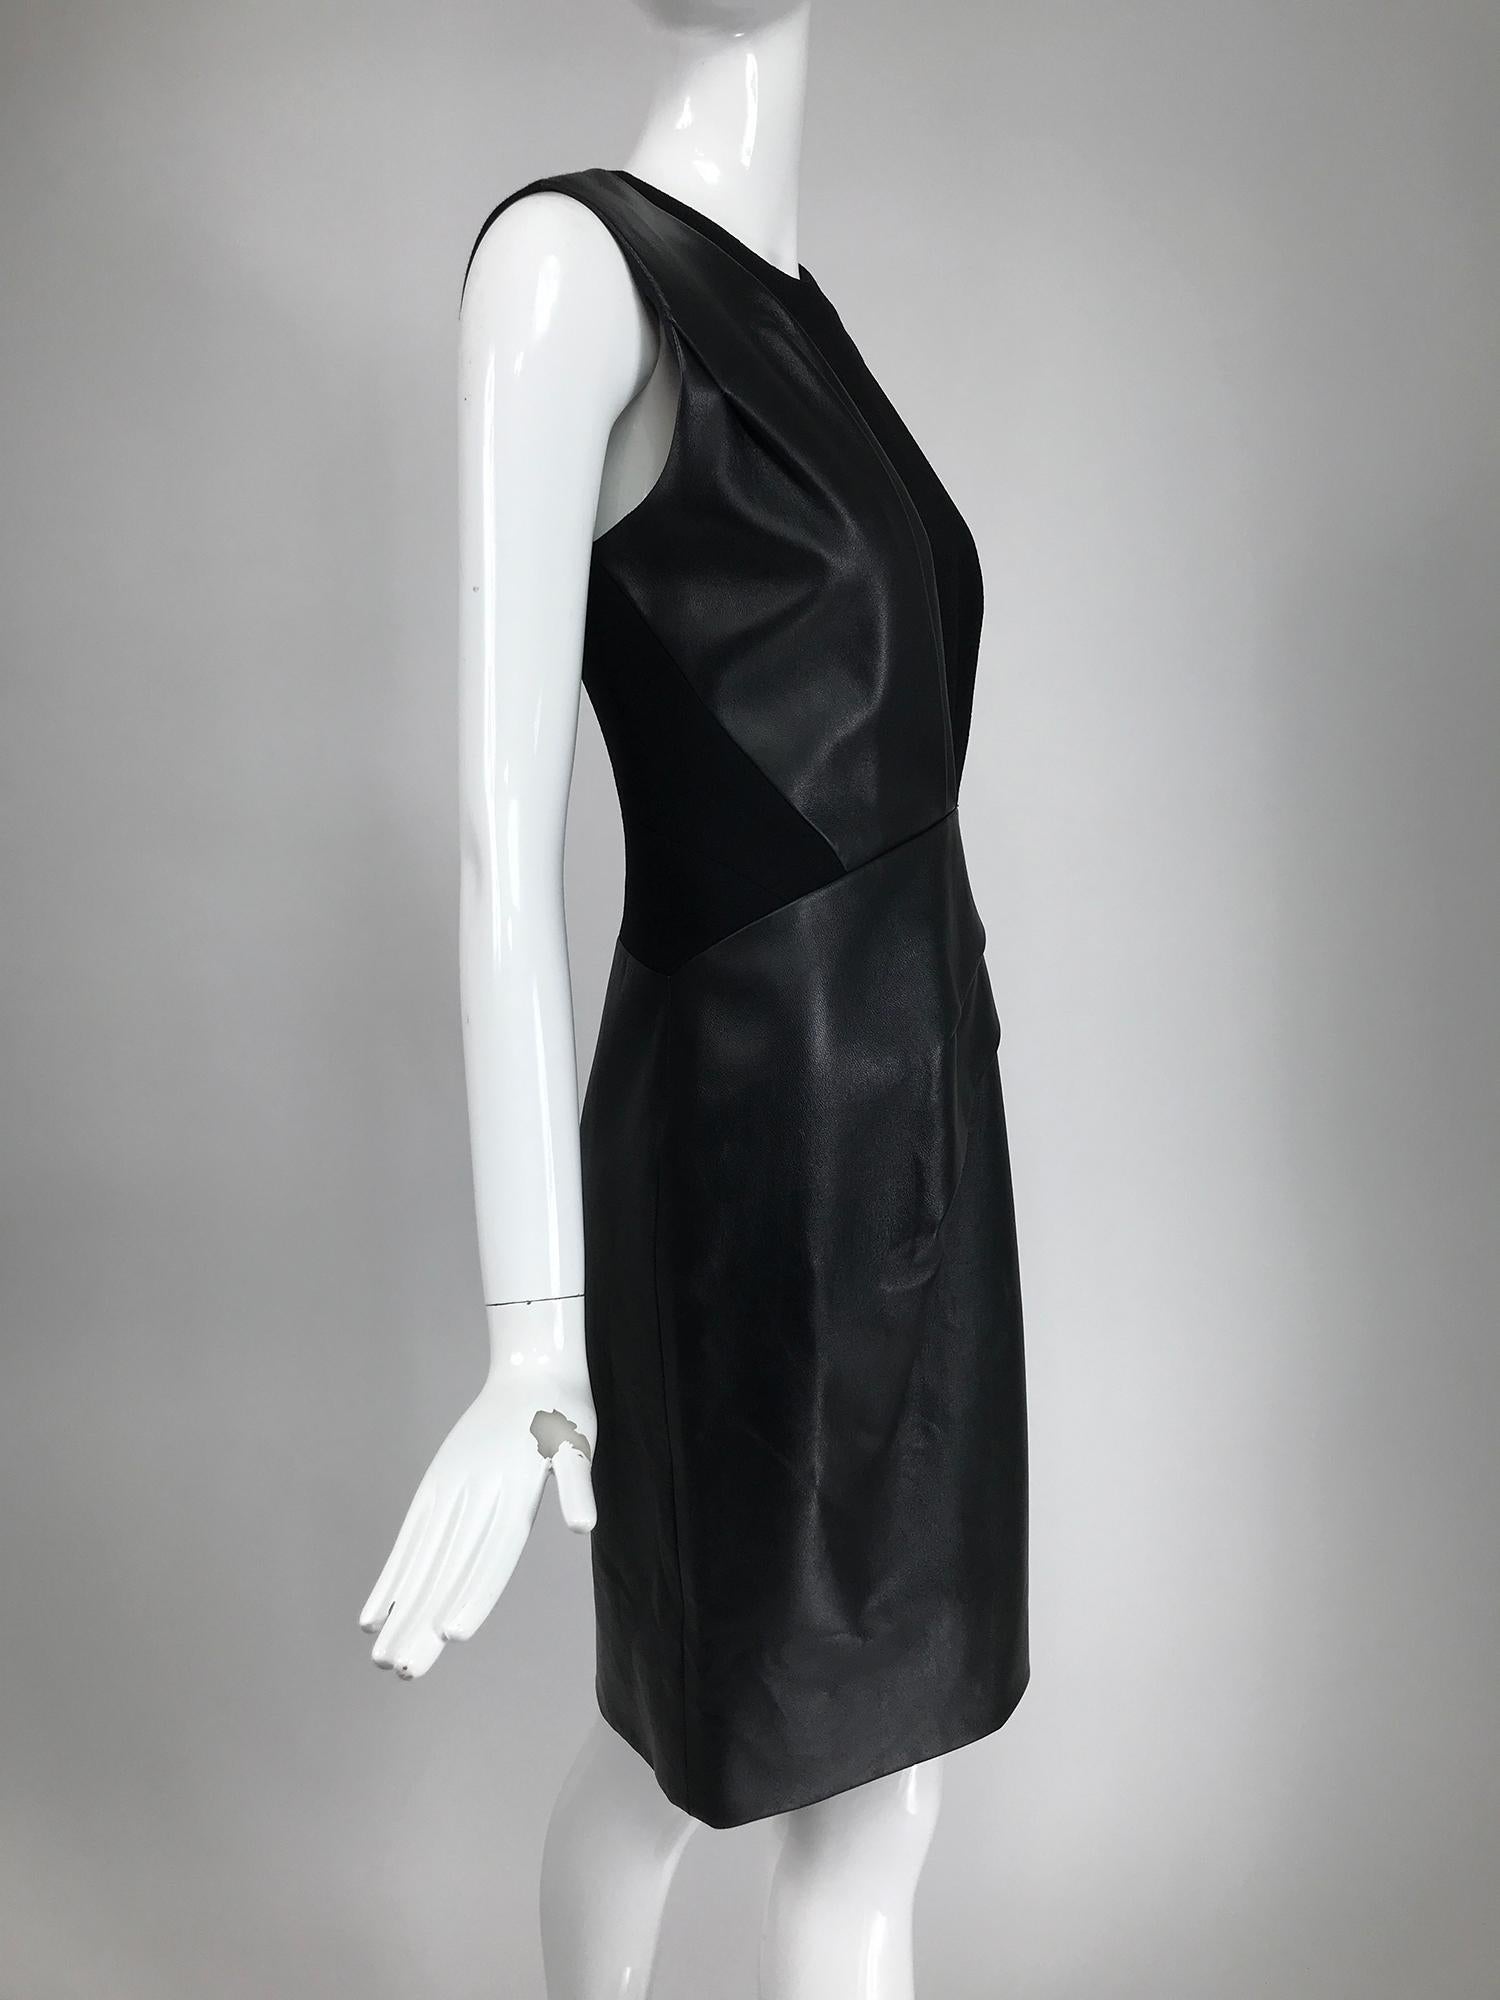 J. Mendel Paris Black Wool & Leather Sheath Dress  1